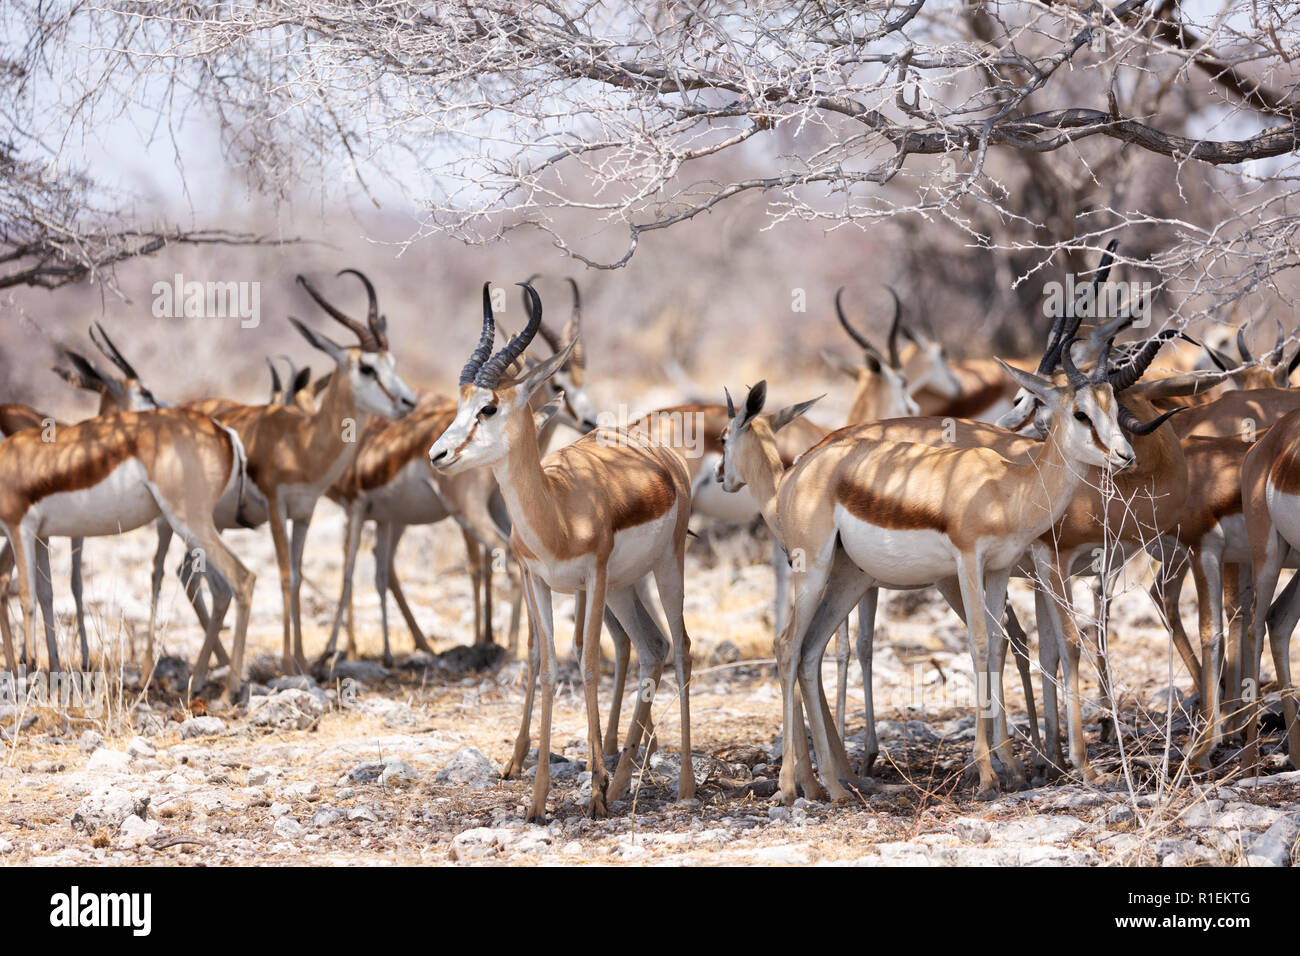 Namibia wildlife - springbok antelopes ( Antidorcas marsupialis ) sheltering from the midday heat, Etosha national park, Namibia Africa Stock Photo